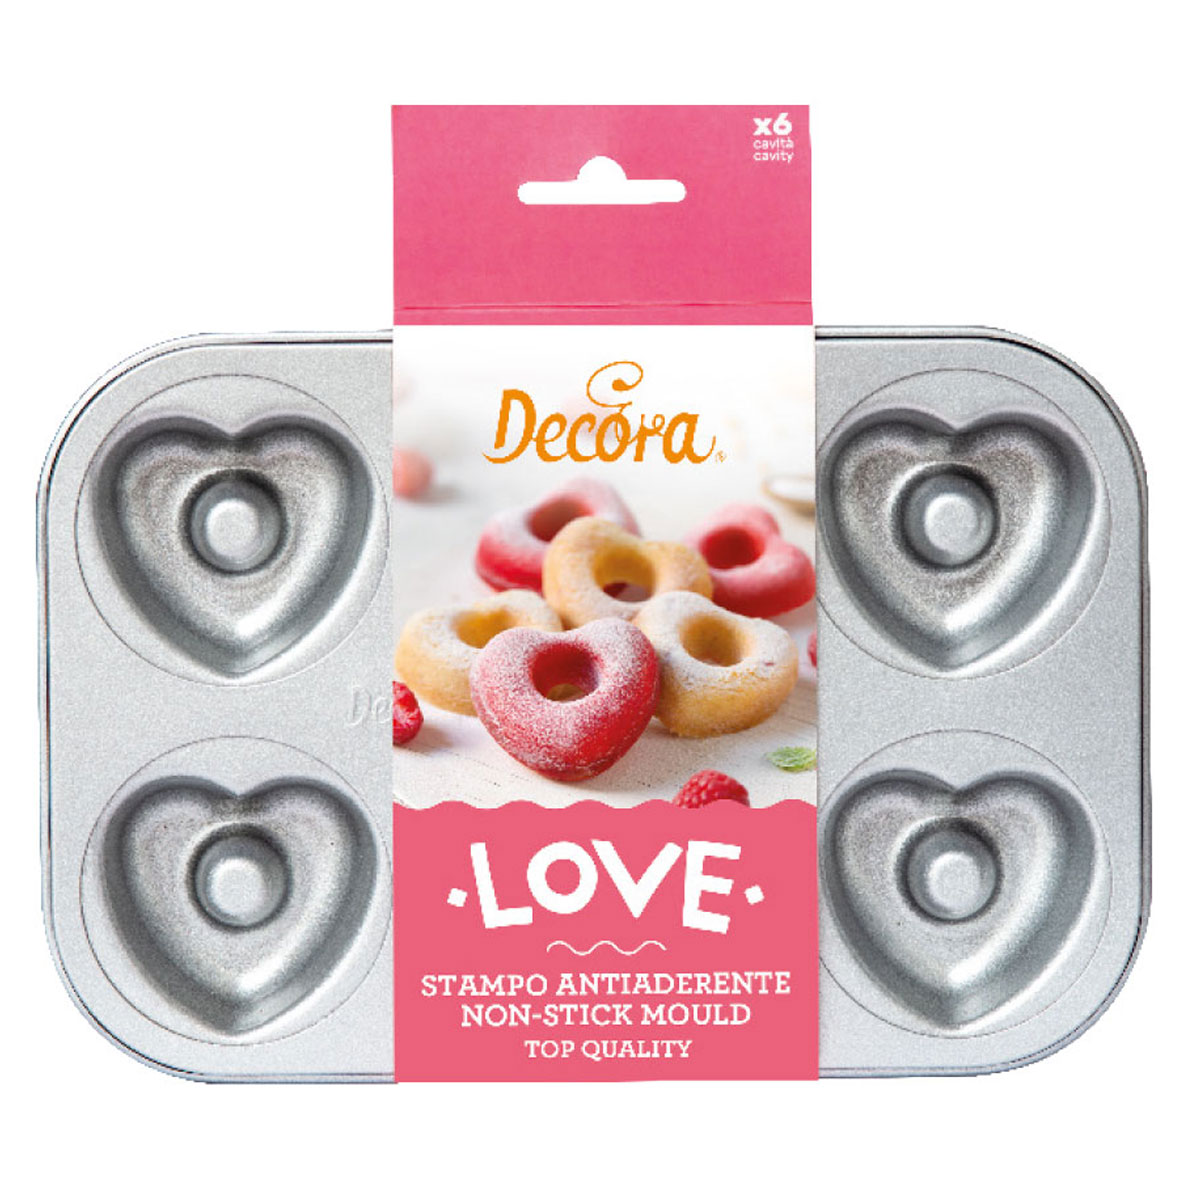 Decora Backform Donut - Amore